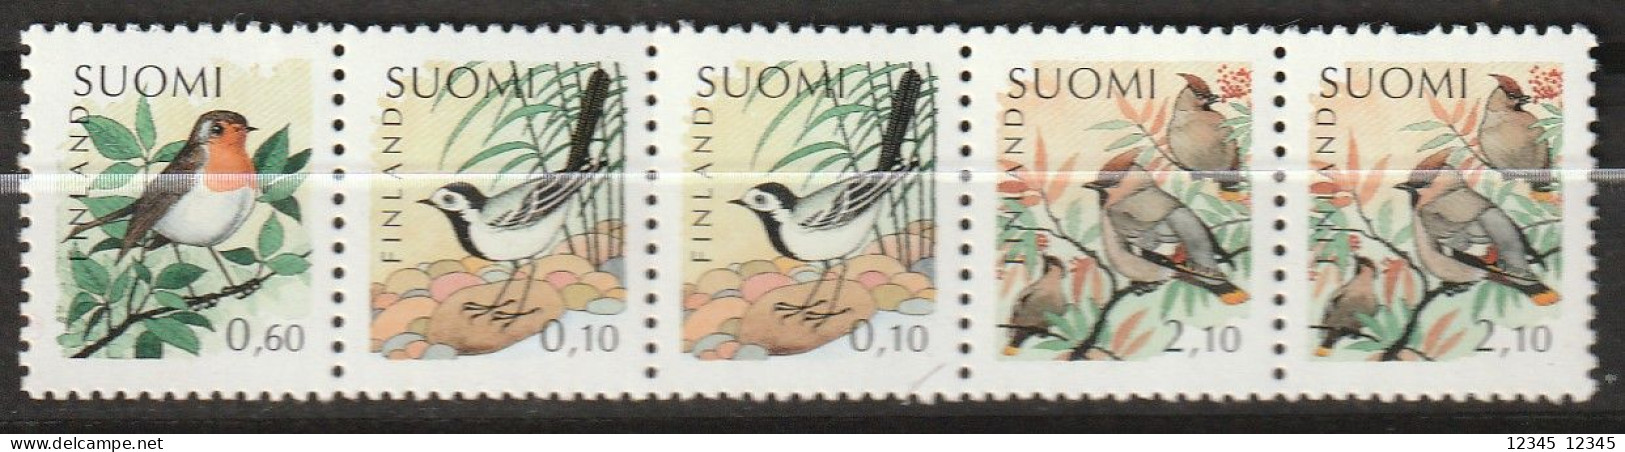 Finland 1992, Postfris MNH, Birds - Booklets